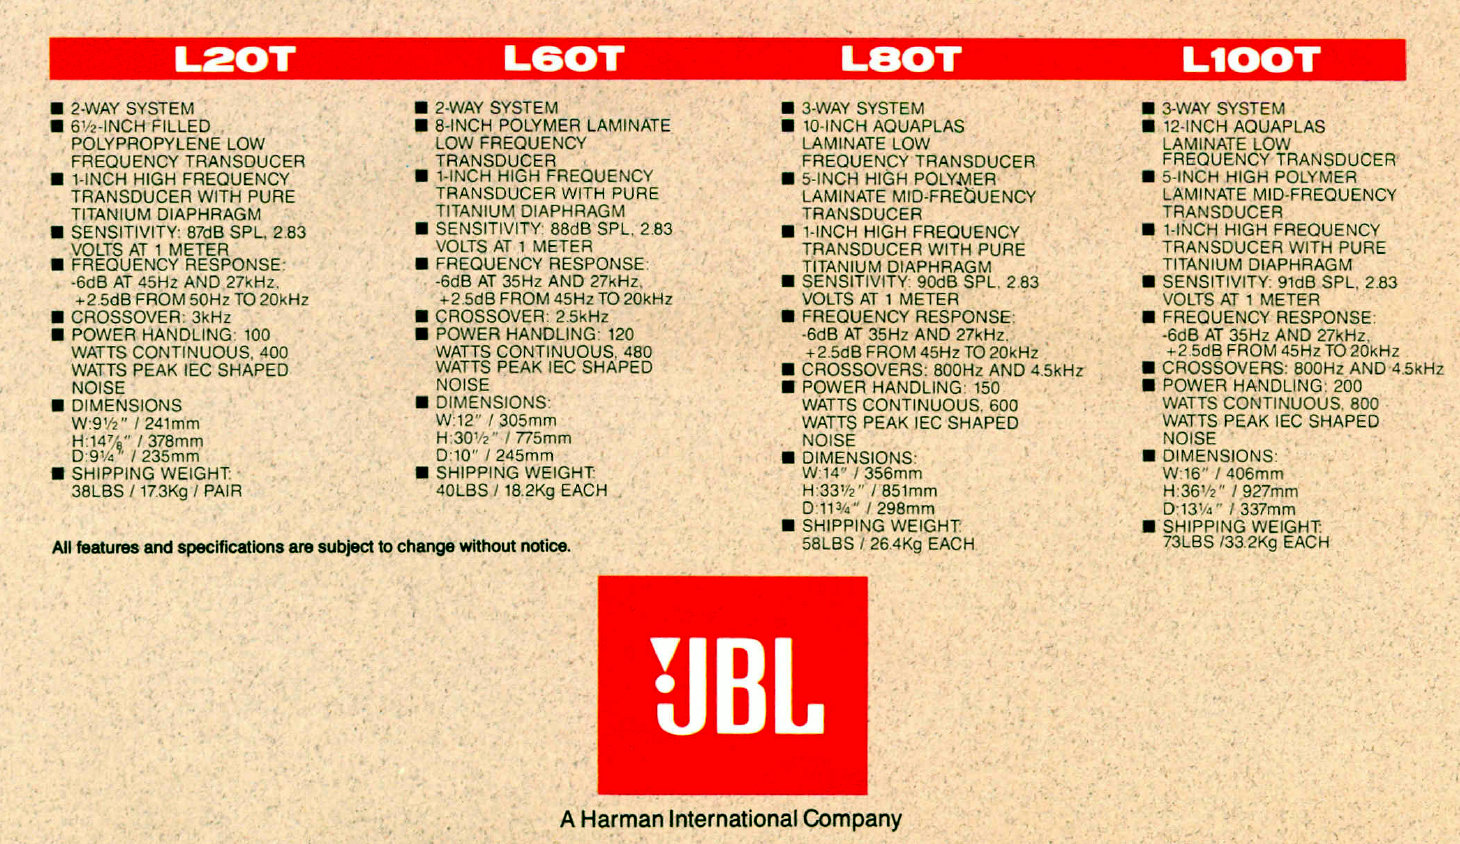 låne præmedicinering metallisk JBL L 80 T | hifi-wiki.com